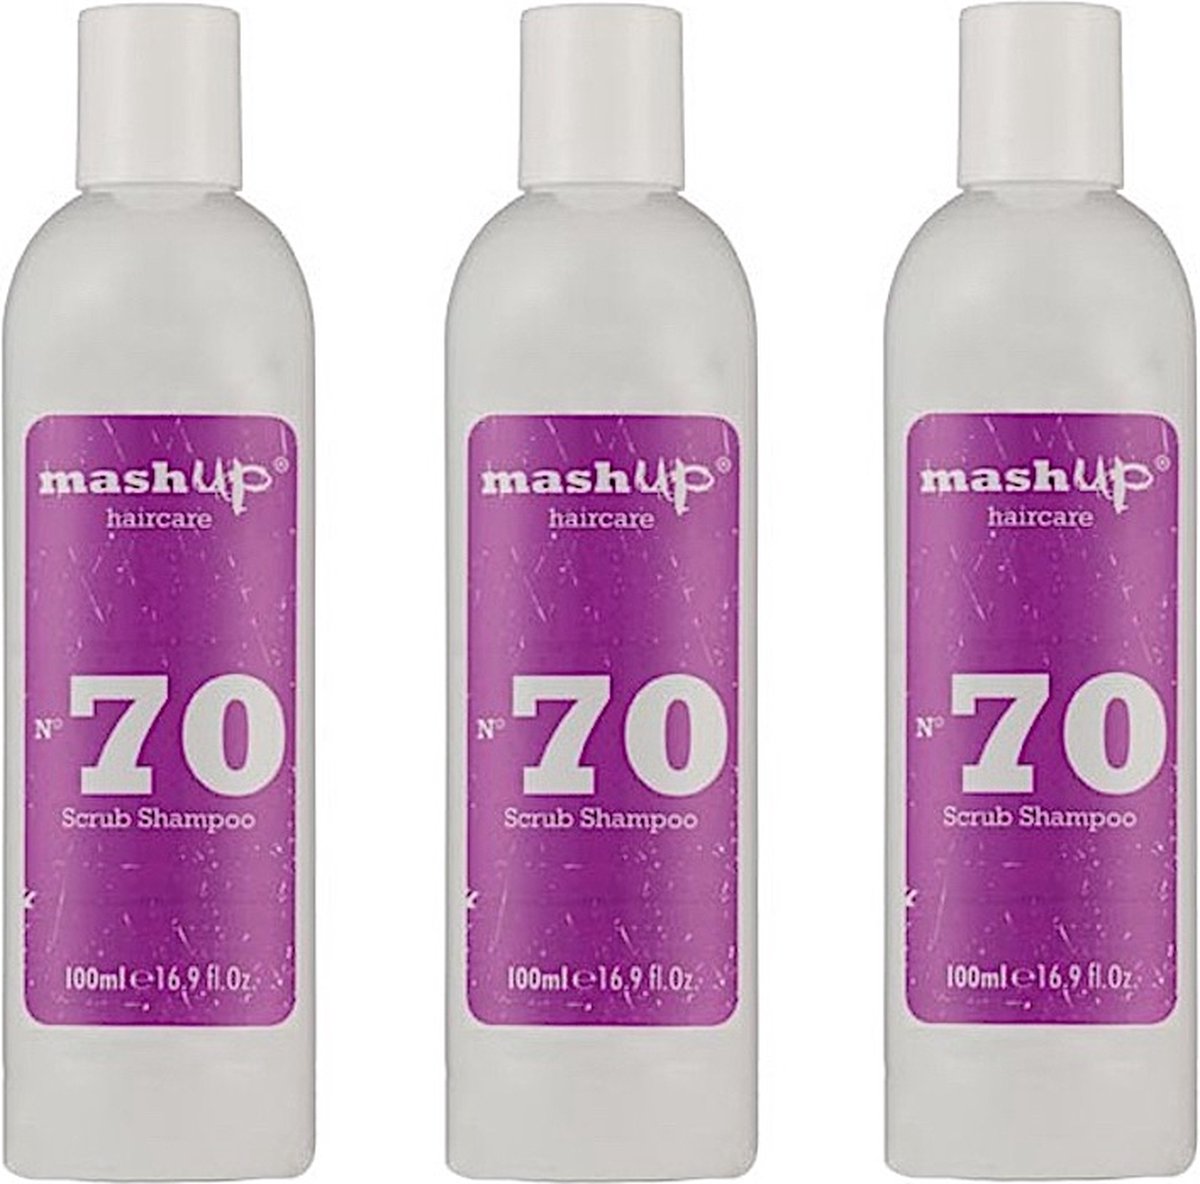 mashUp haircare N° 70 Scrub Shampoo 100ml – 3 stuks